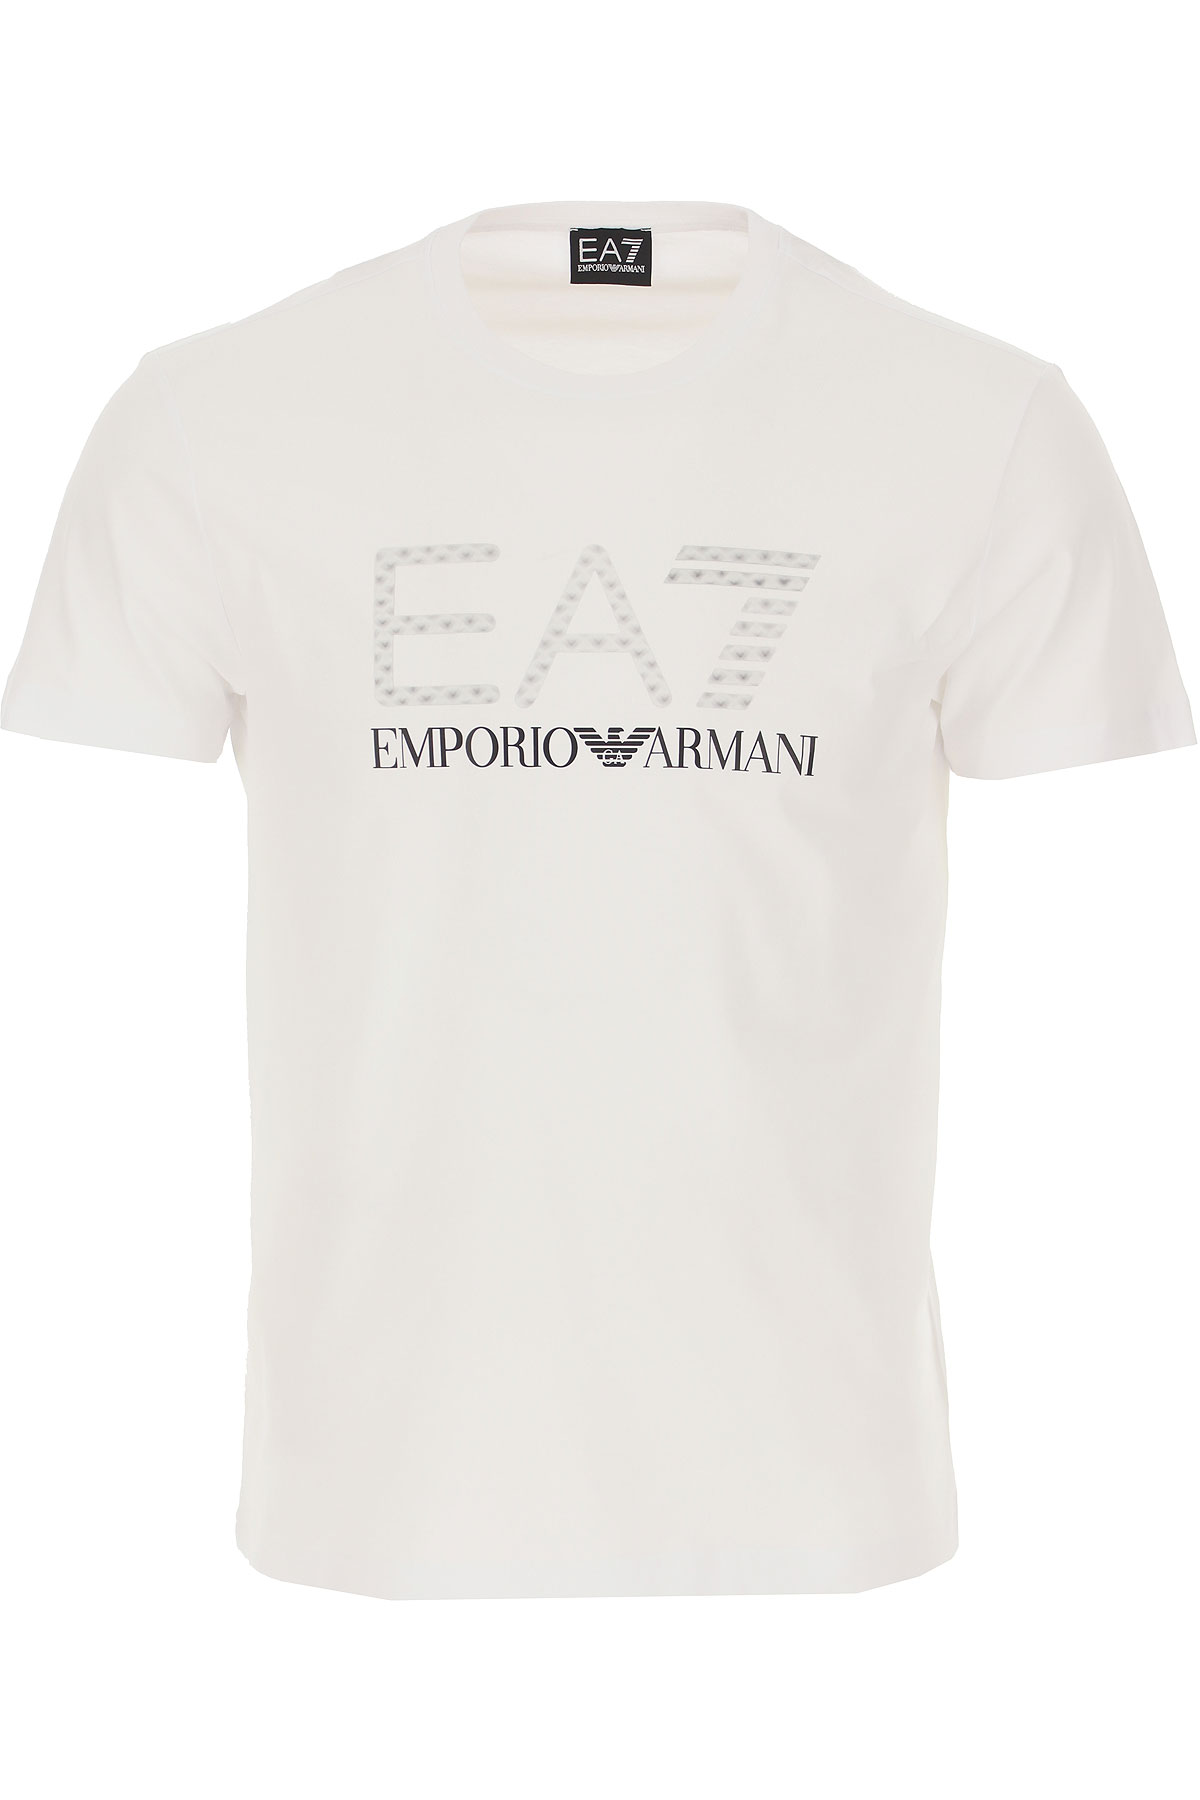 Mens Clothing Emporio Armani, Style code: 3kpt12-pj7cz-1100